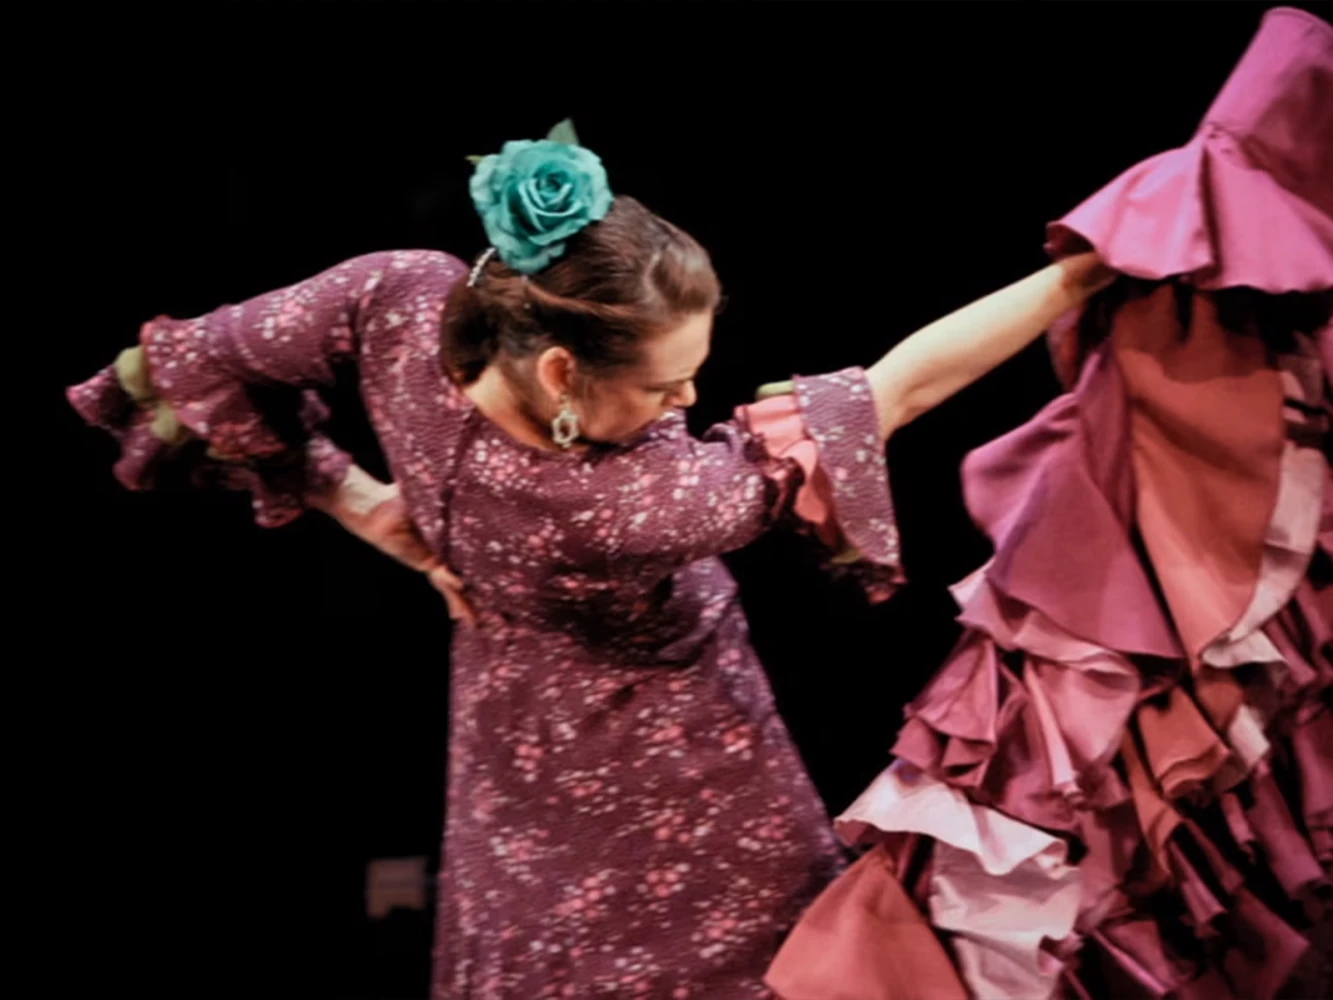 Symphonic Tango & Flamenco: What to expect - 1